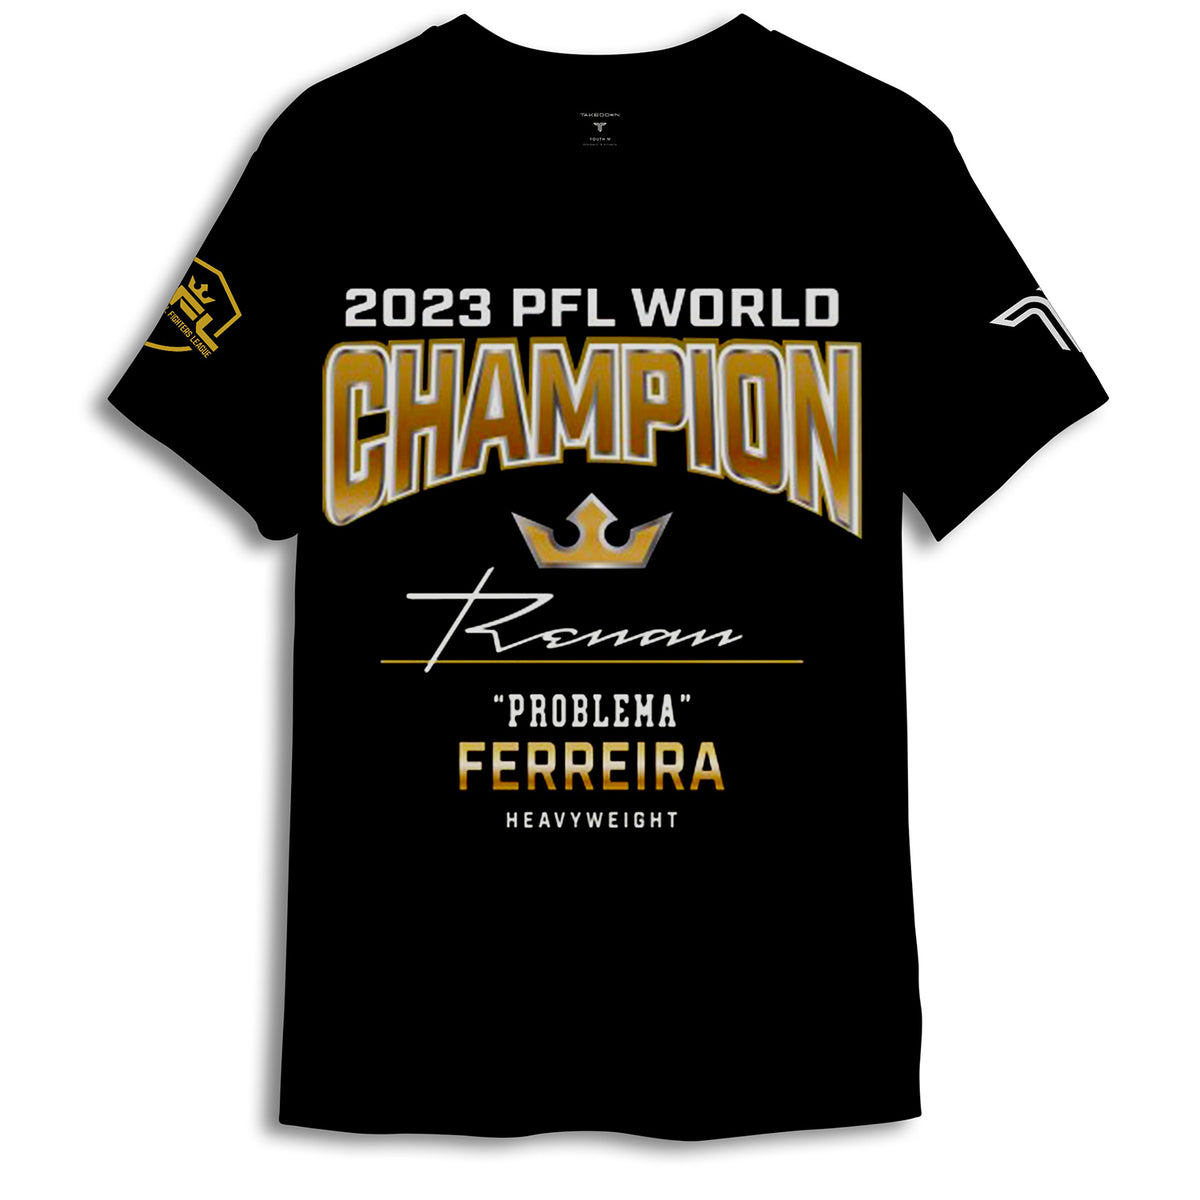 PFL Heavyweight Champion T-Shirt - Renan Ferreira - Front View